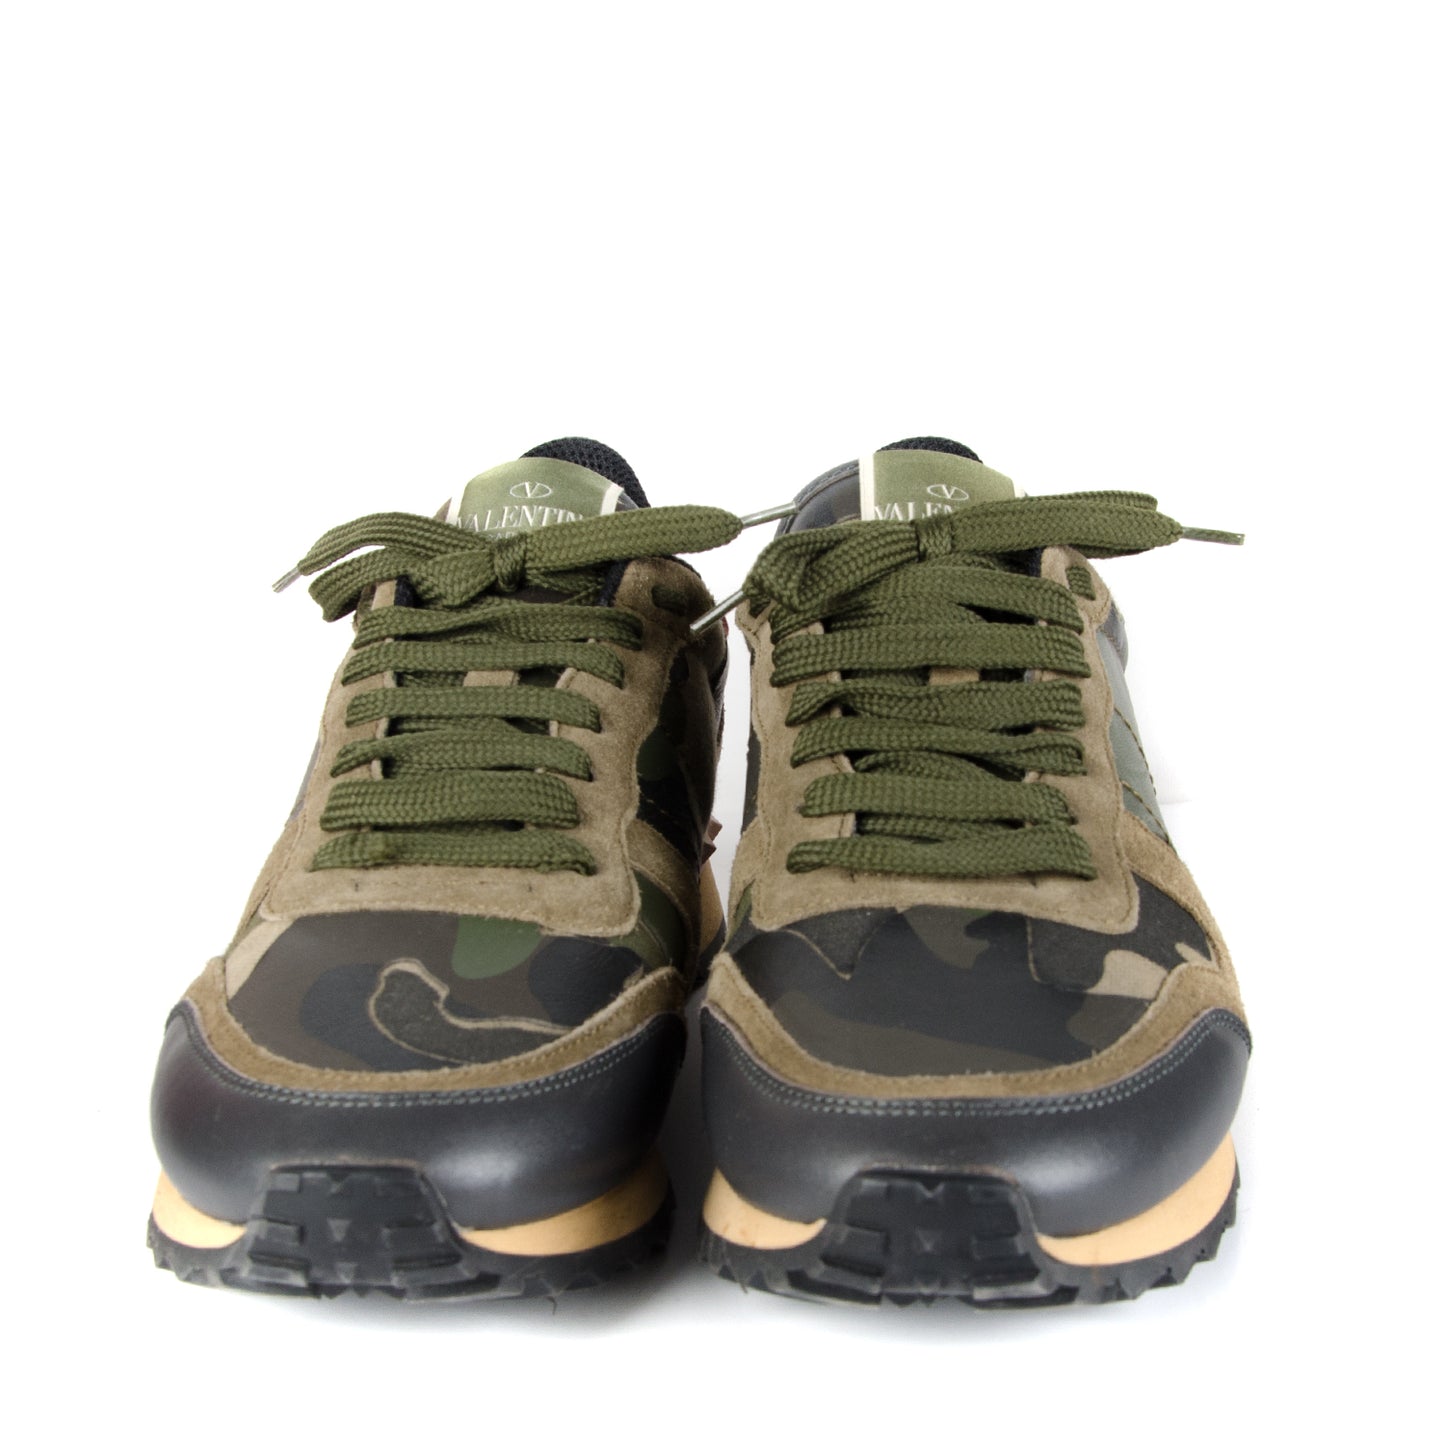 Khaki Camouflage Rock Runner Sneakers